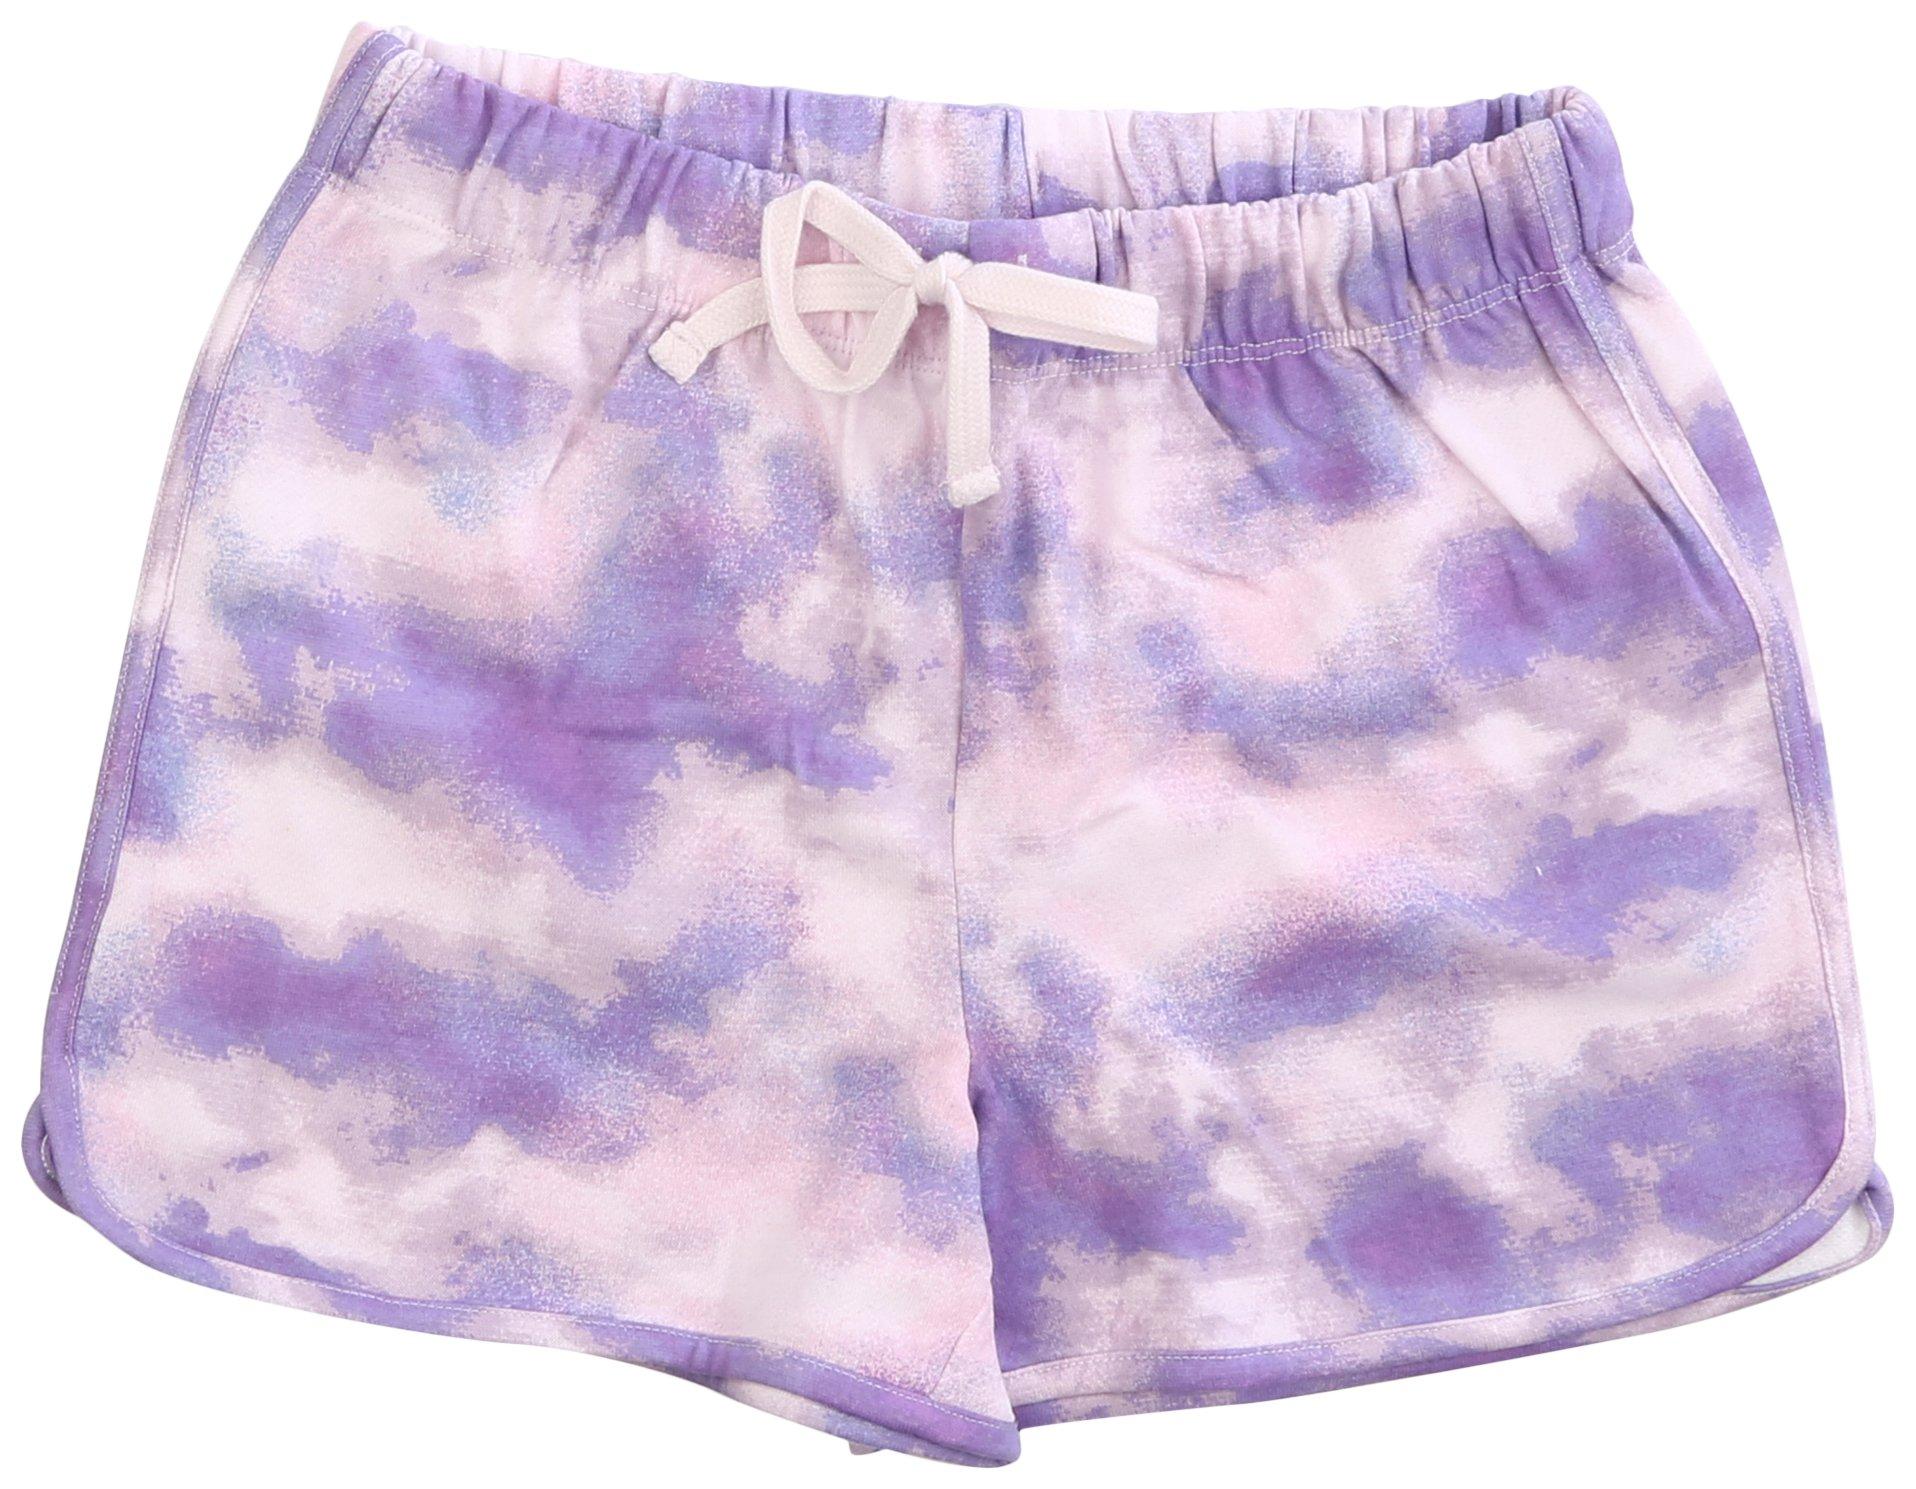 Big Girls Purple Fleece Shorts